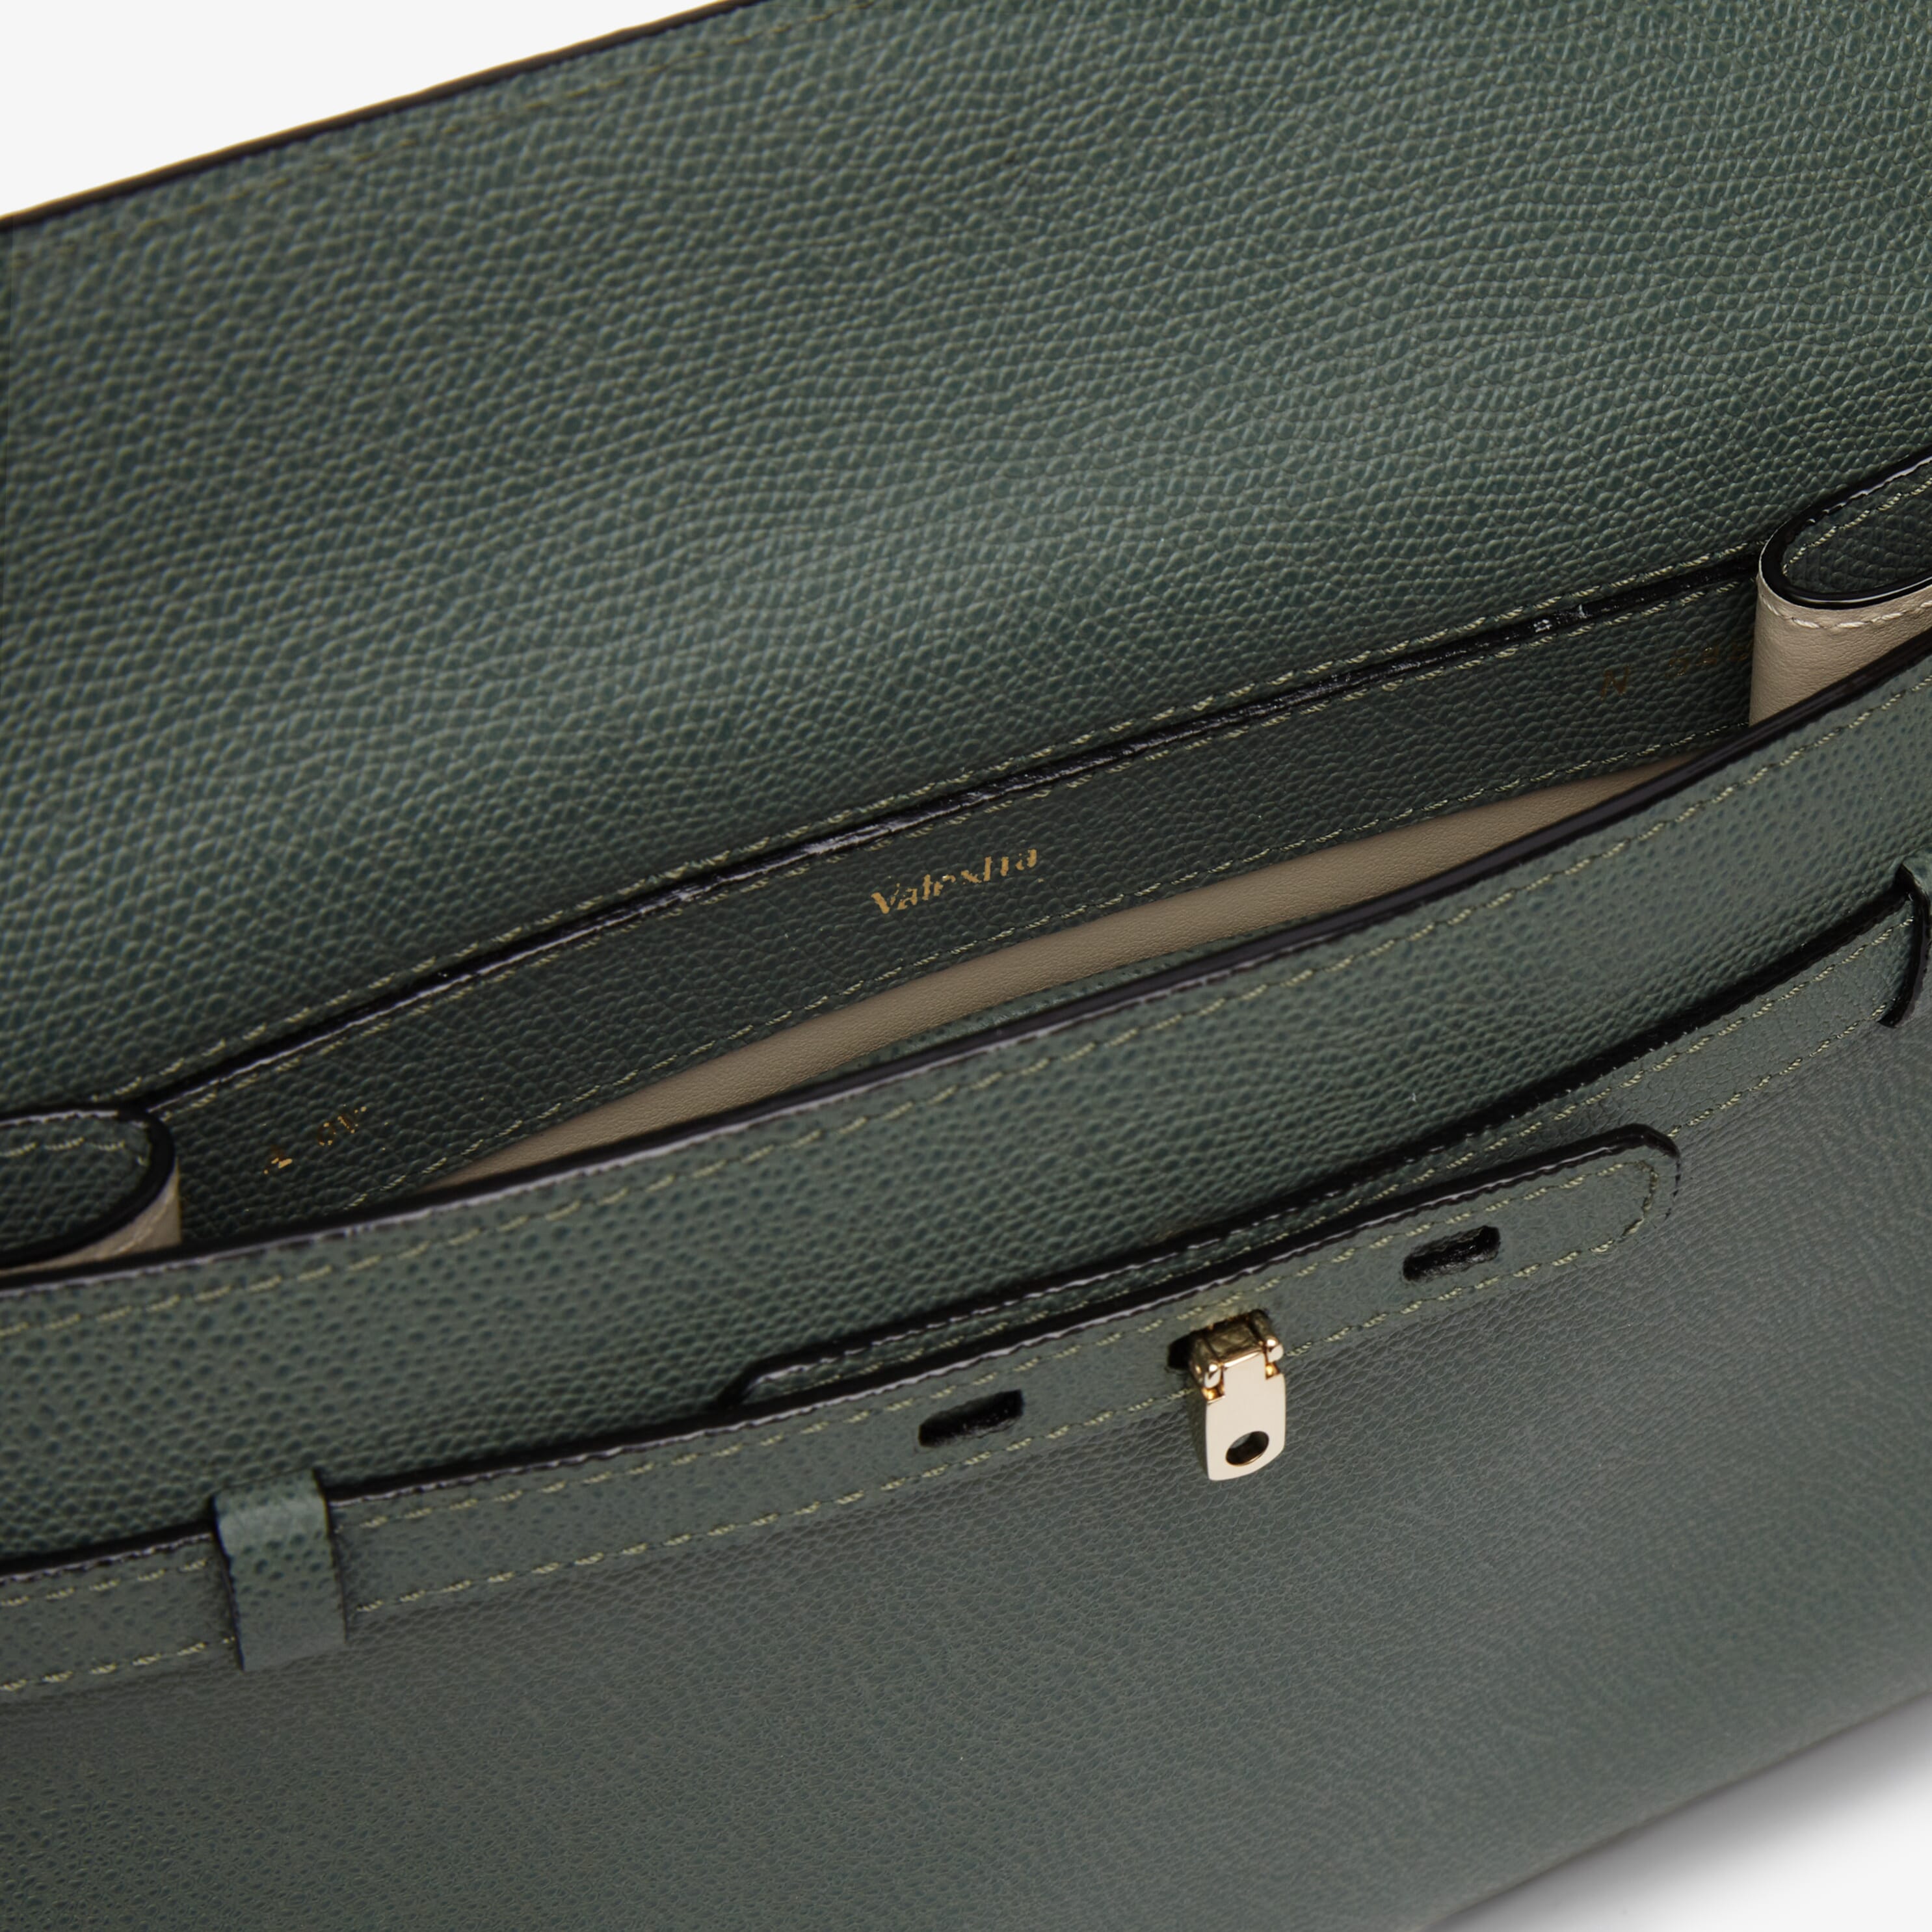 Women's Green Grained Leather crossbody bag